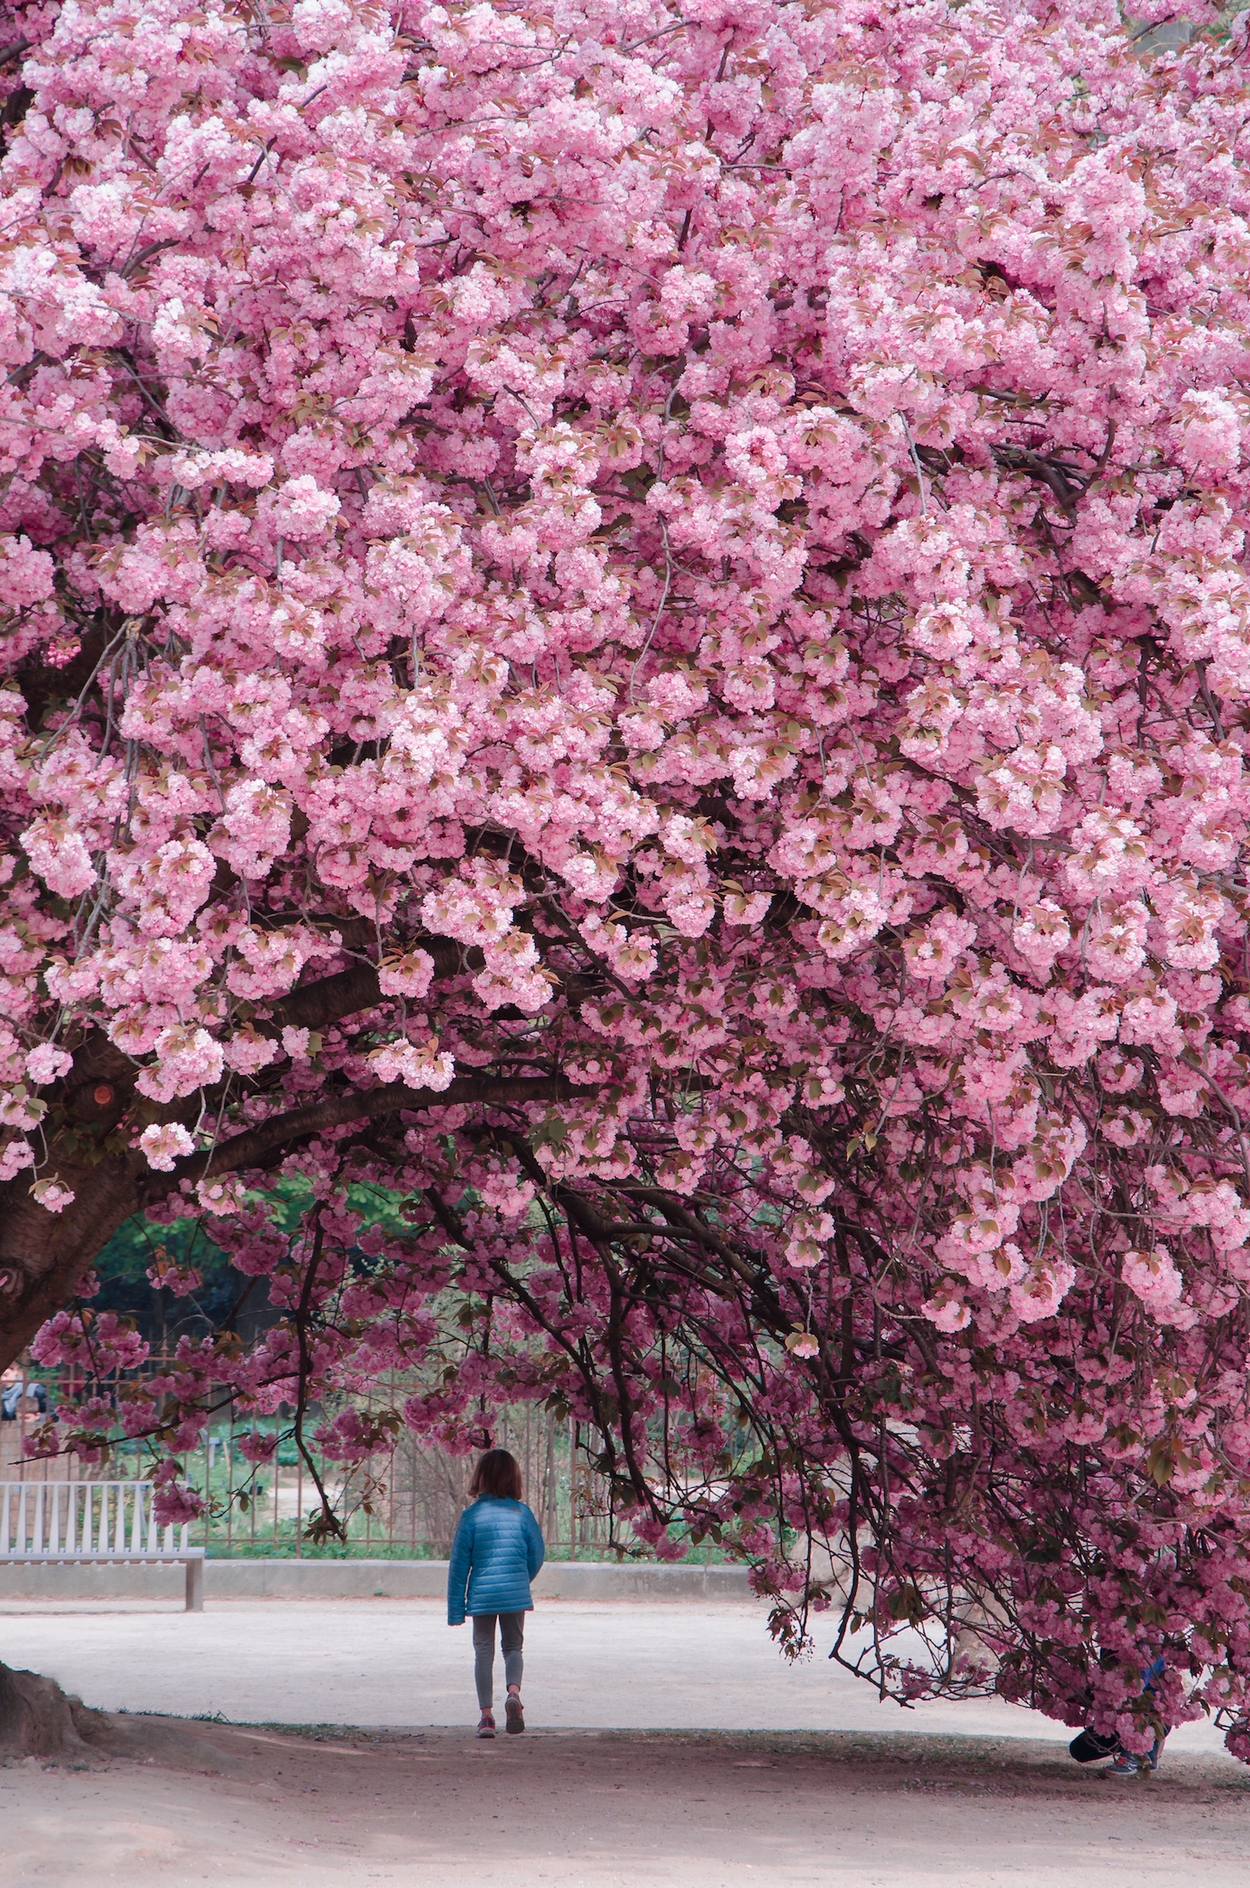 Jardin des plants Paris blossom sakura